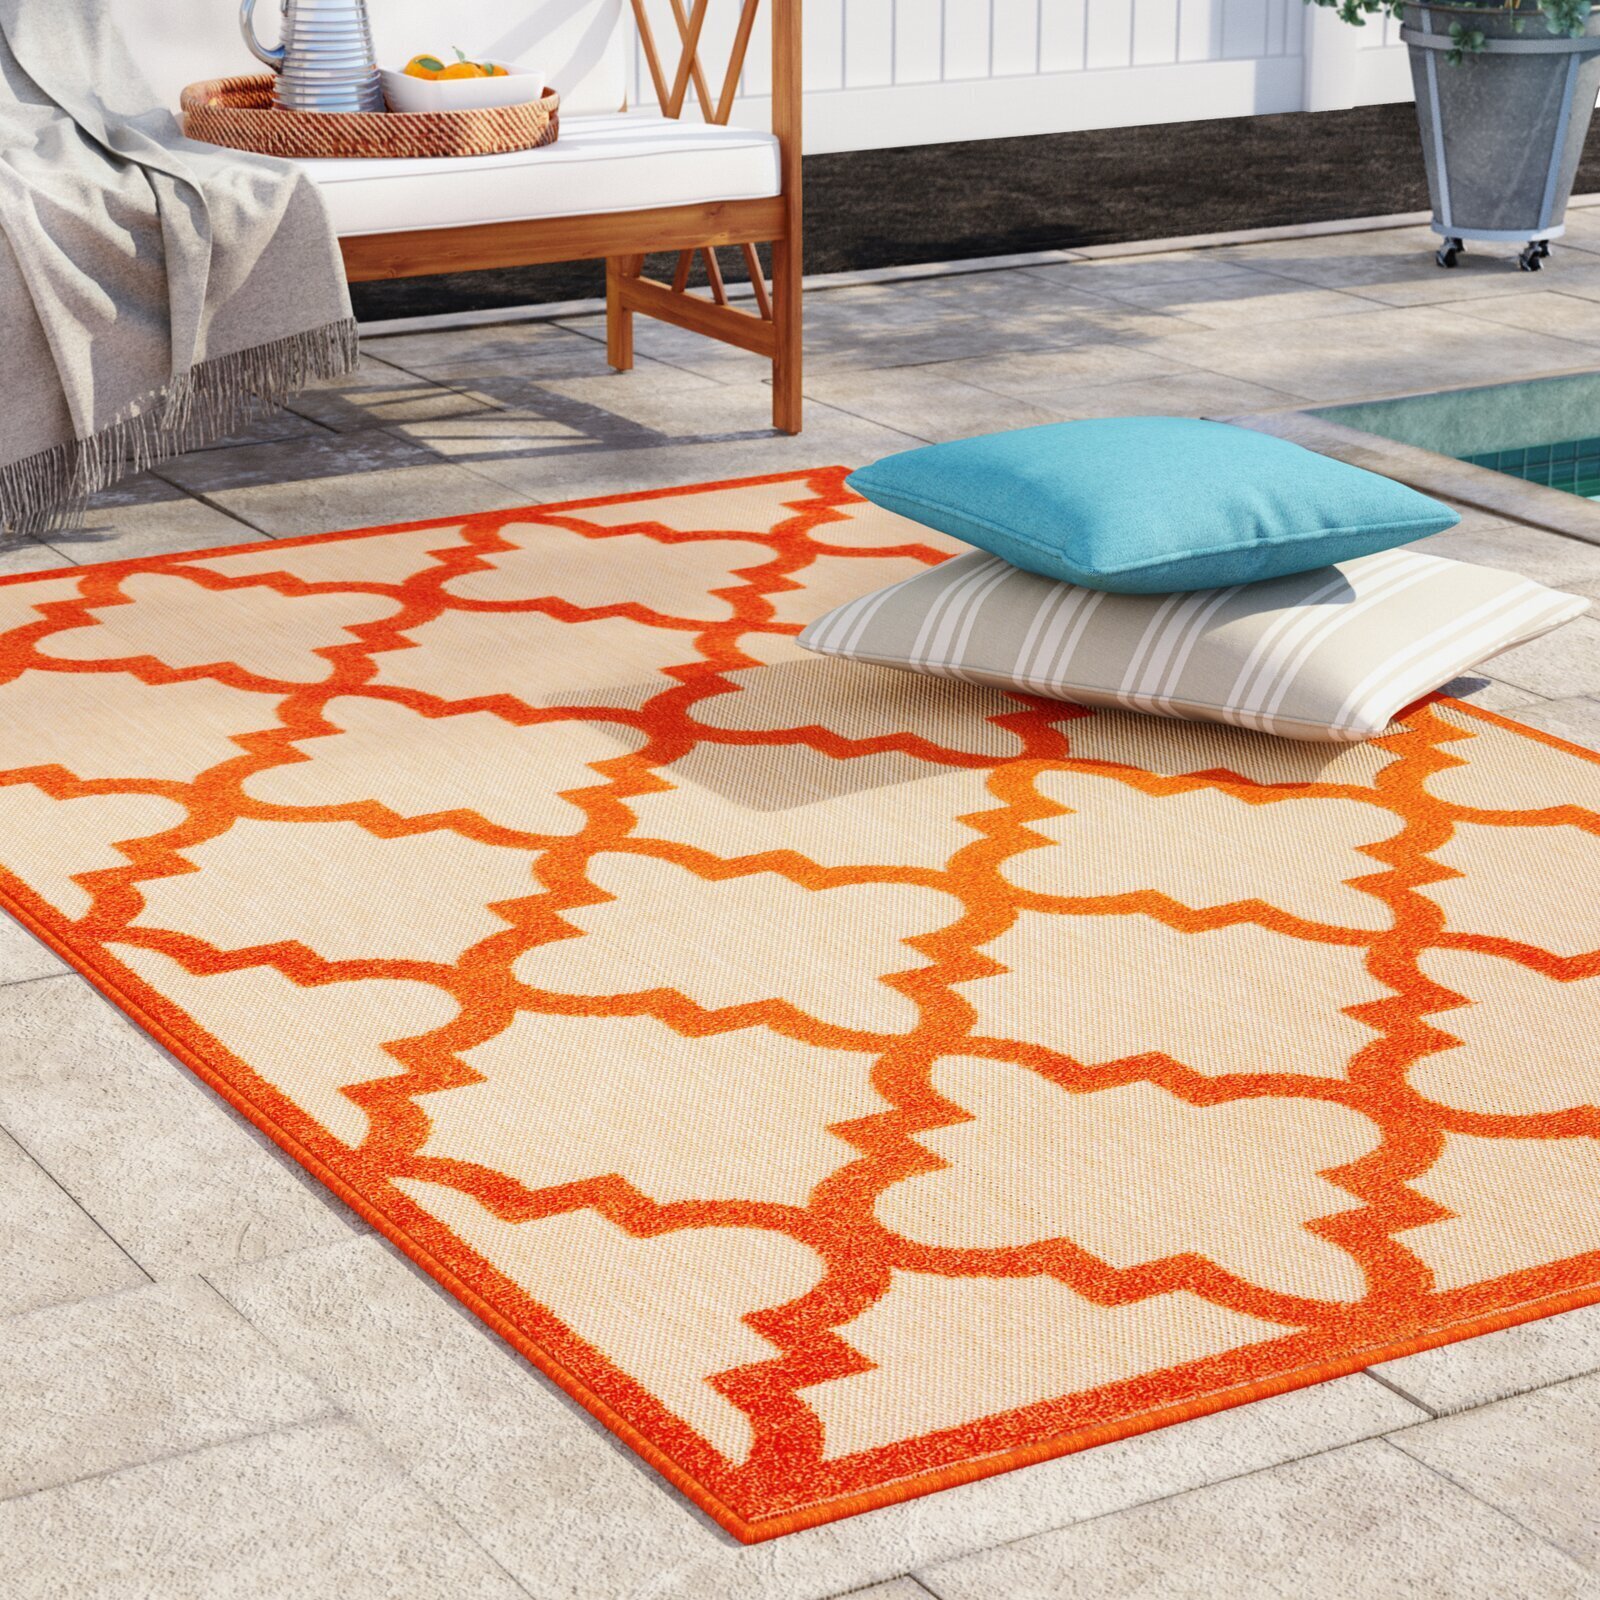 Geometric rectangular outdoor rug